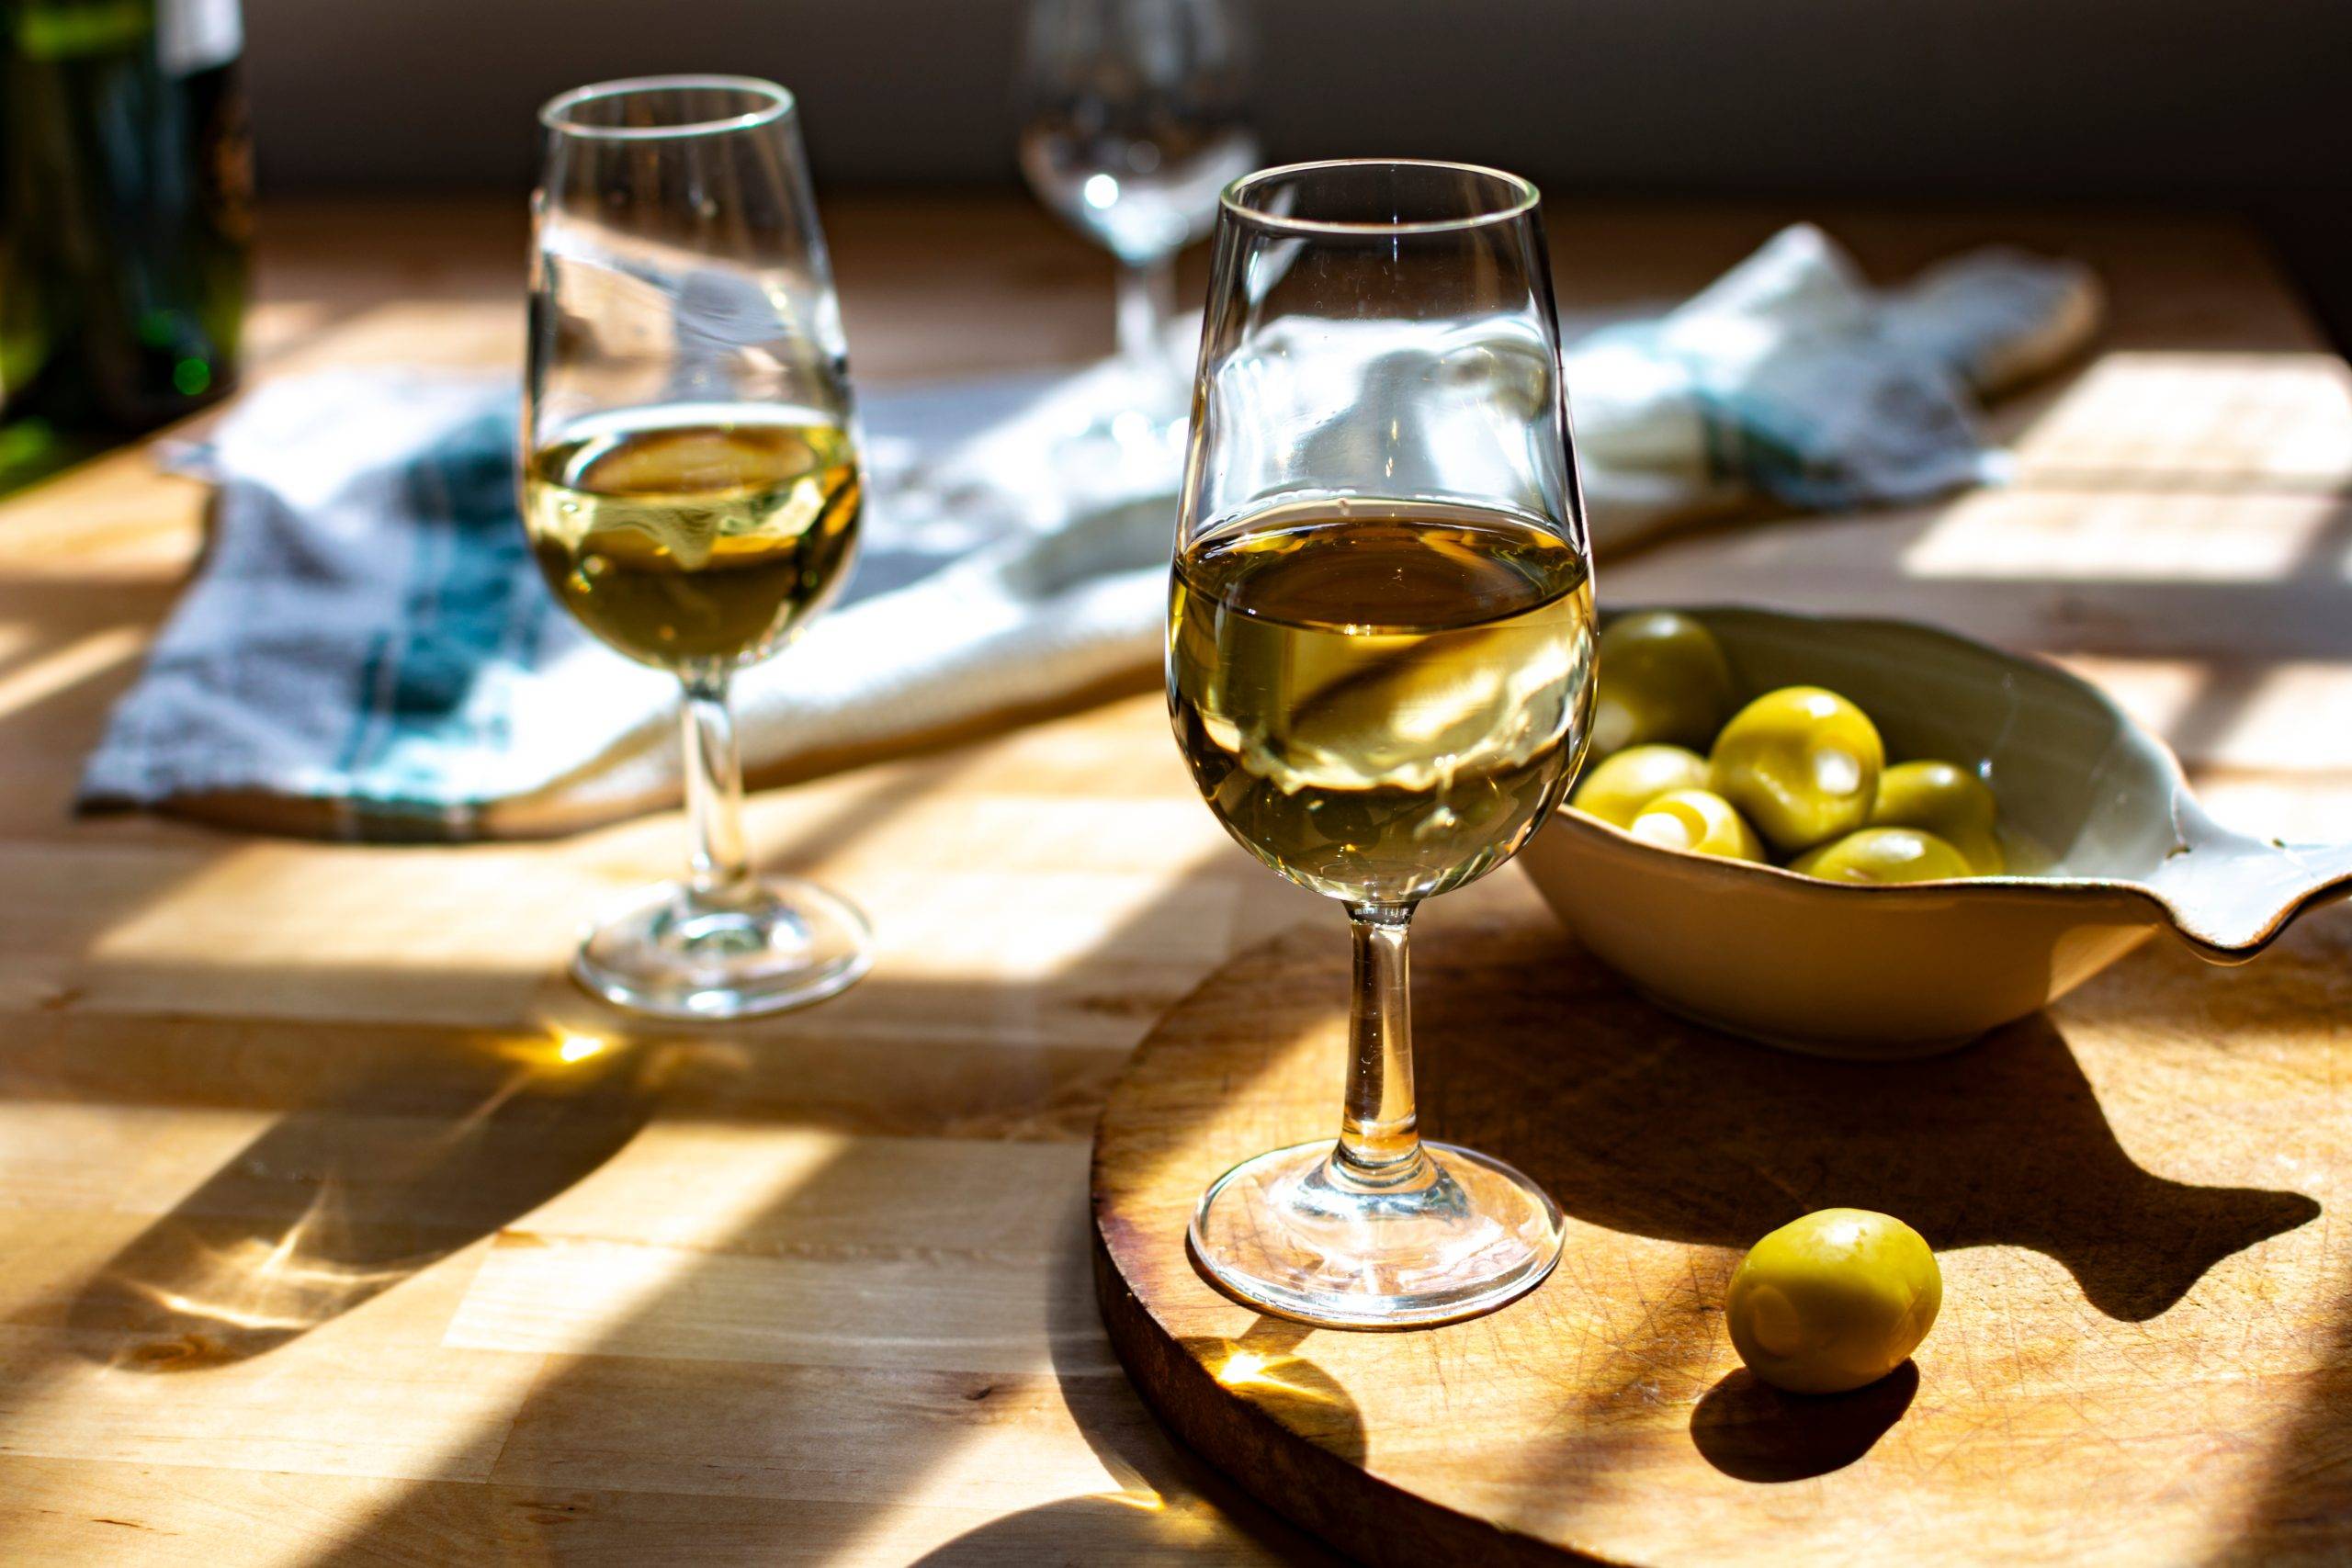 Fira internationella sherryveckan – 5 bra sherrytips